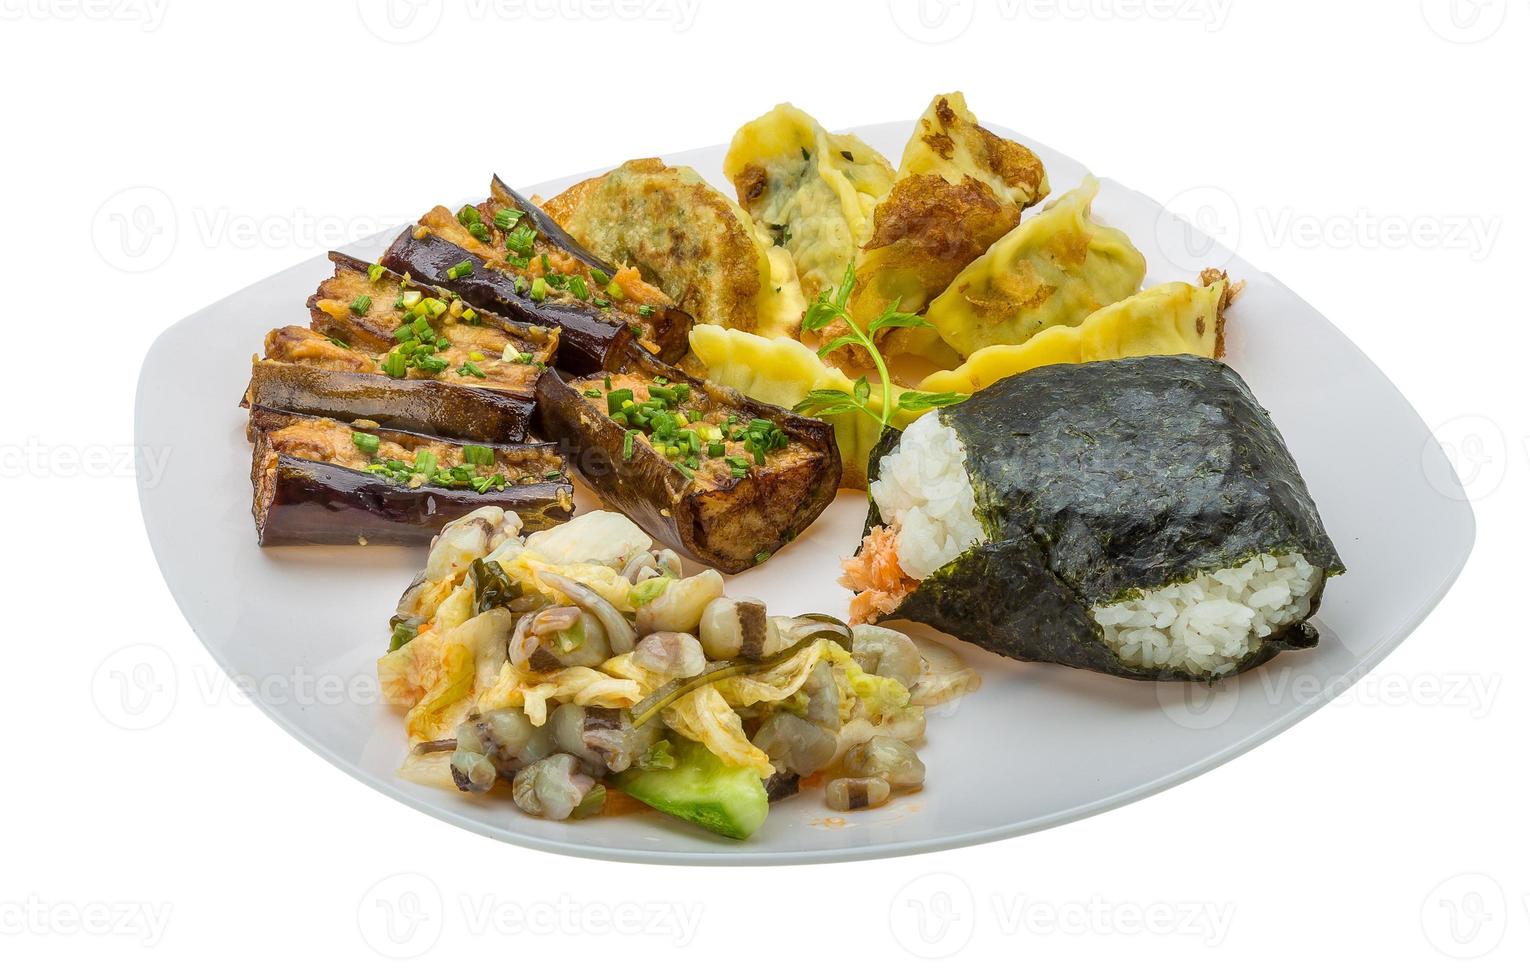 comida tipica de japon foto